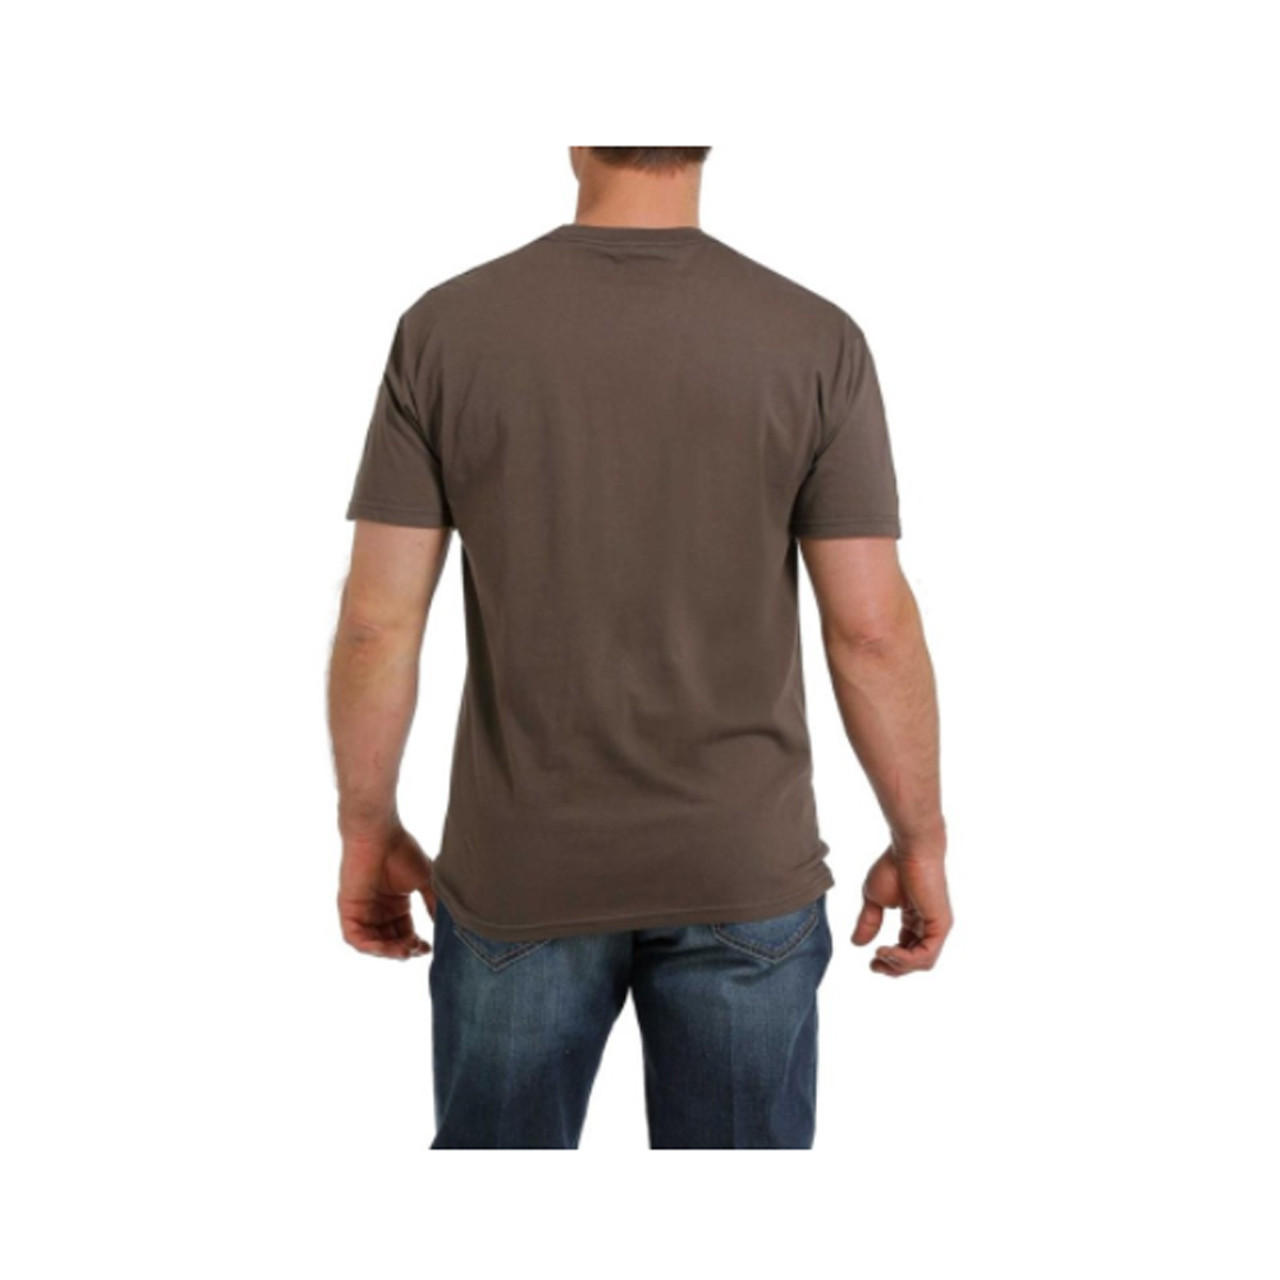 Orton Brothers Men's Ultrasoft Long-Sleeve Mockneck Shirt